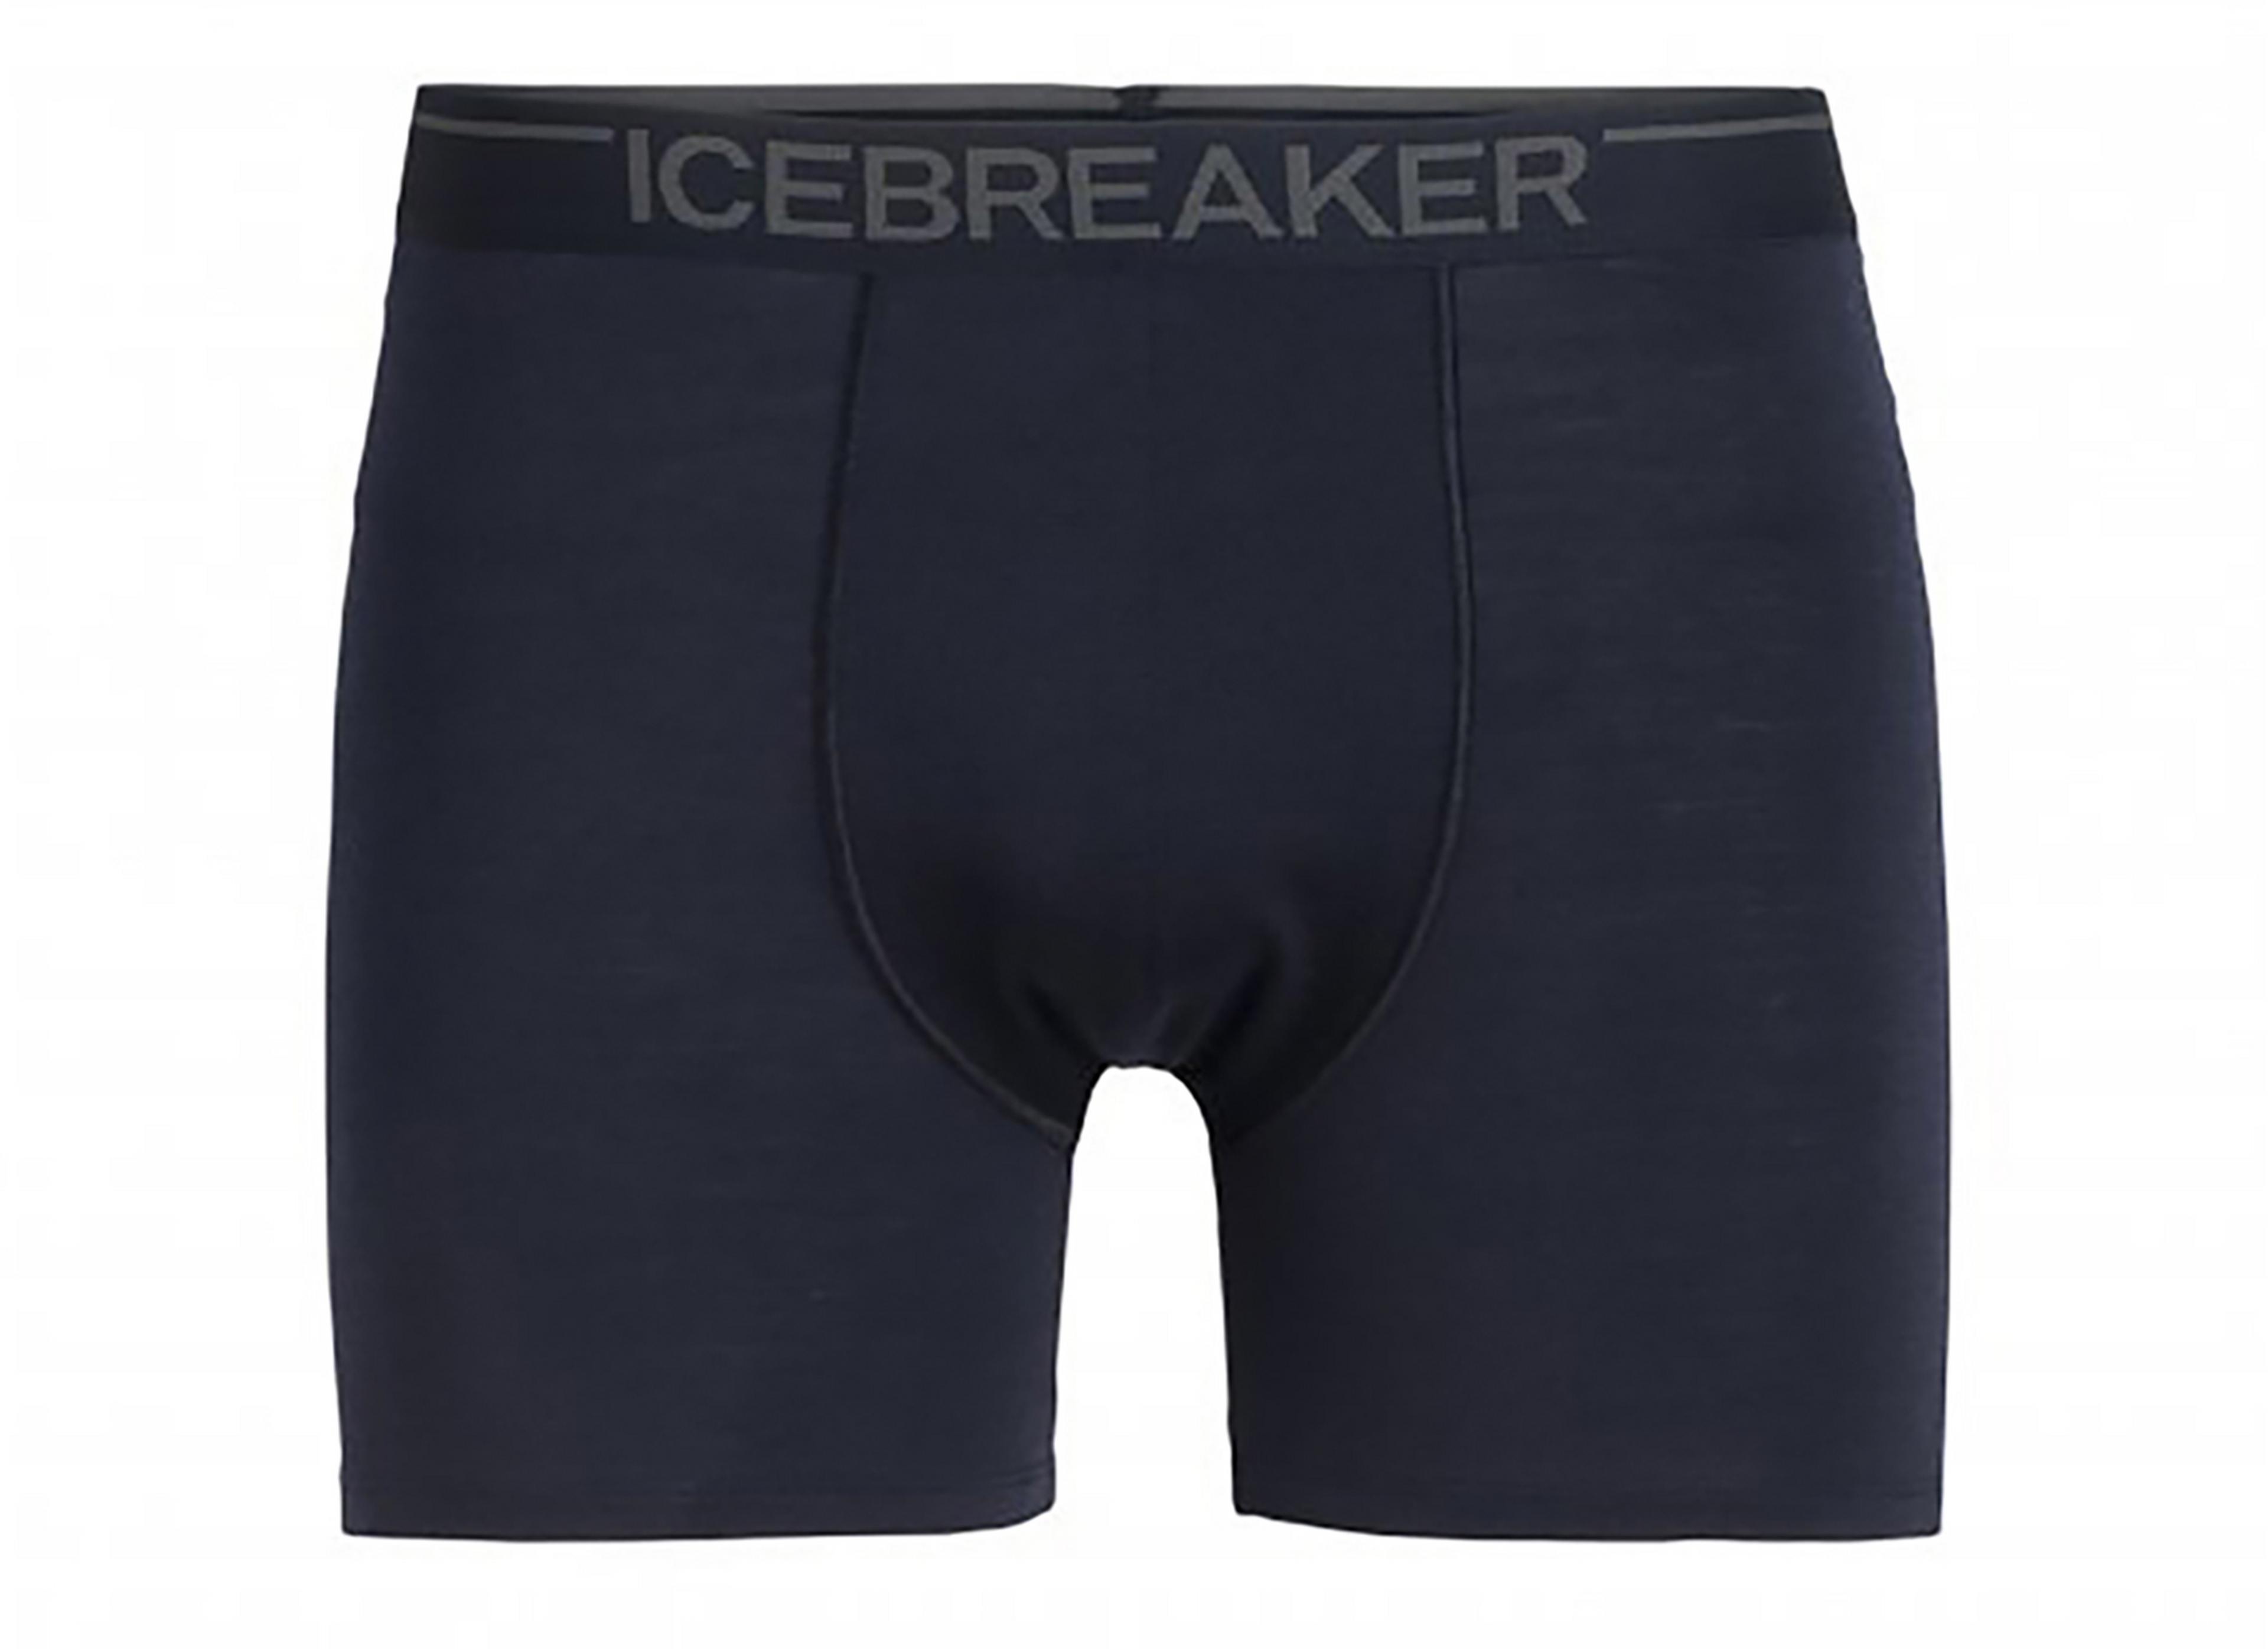  Icebreaker Merino: Underwear